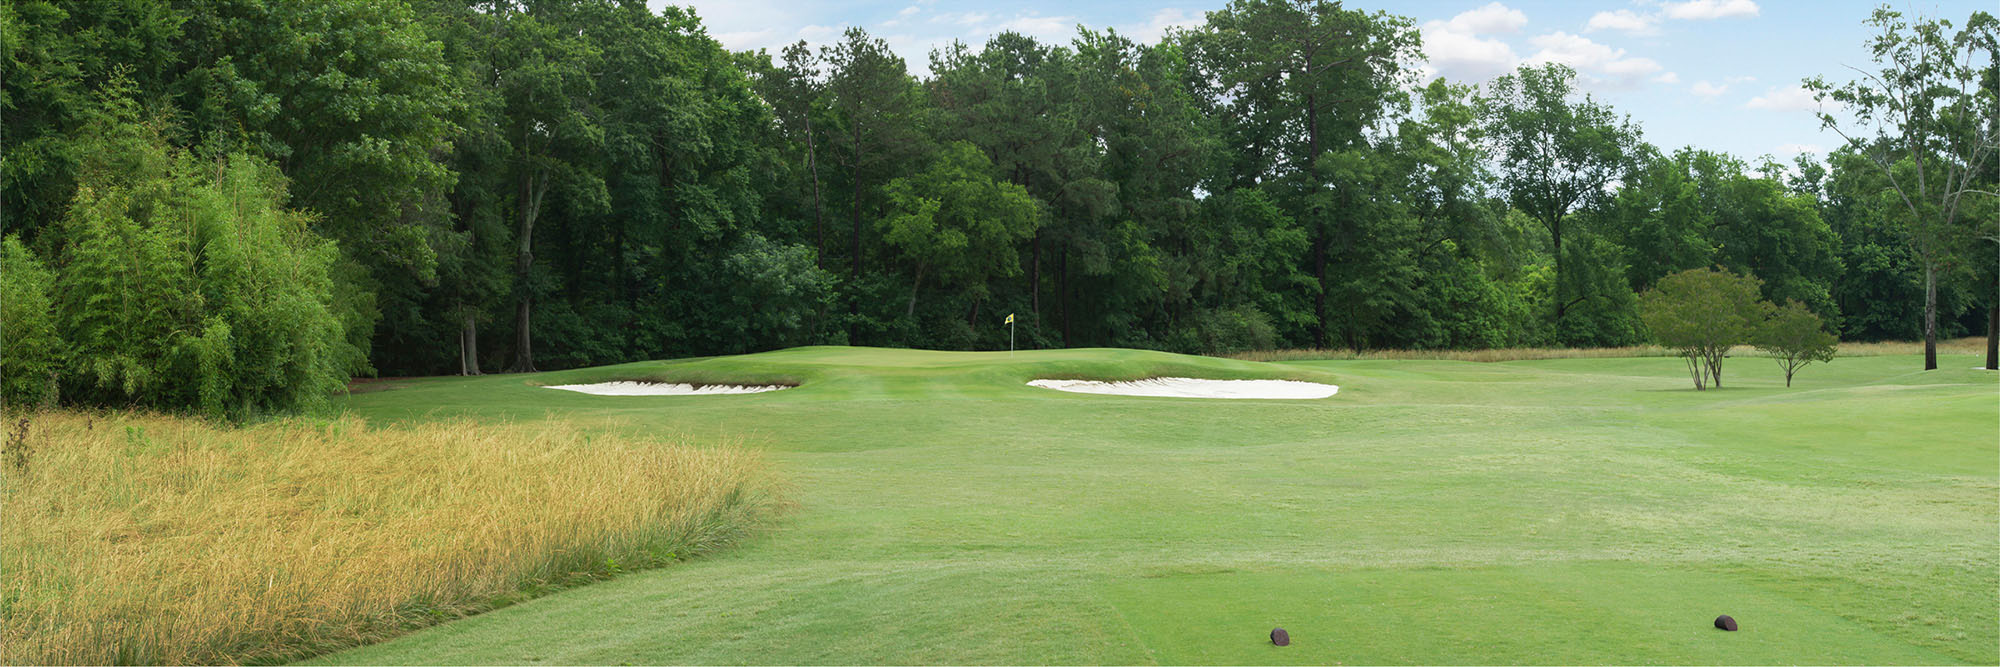 Golf Course Image - Country Club of Jackson No. 13